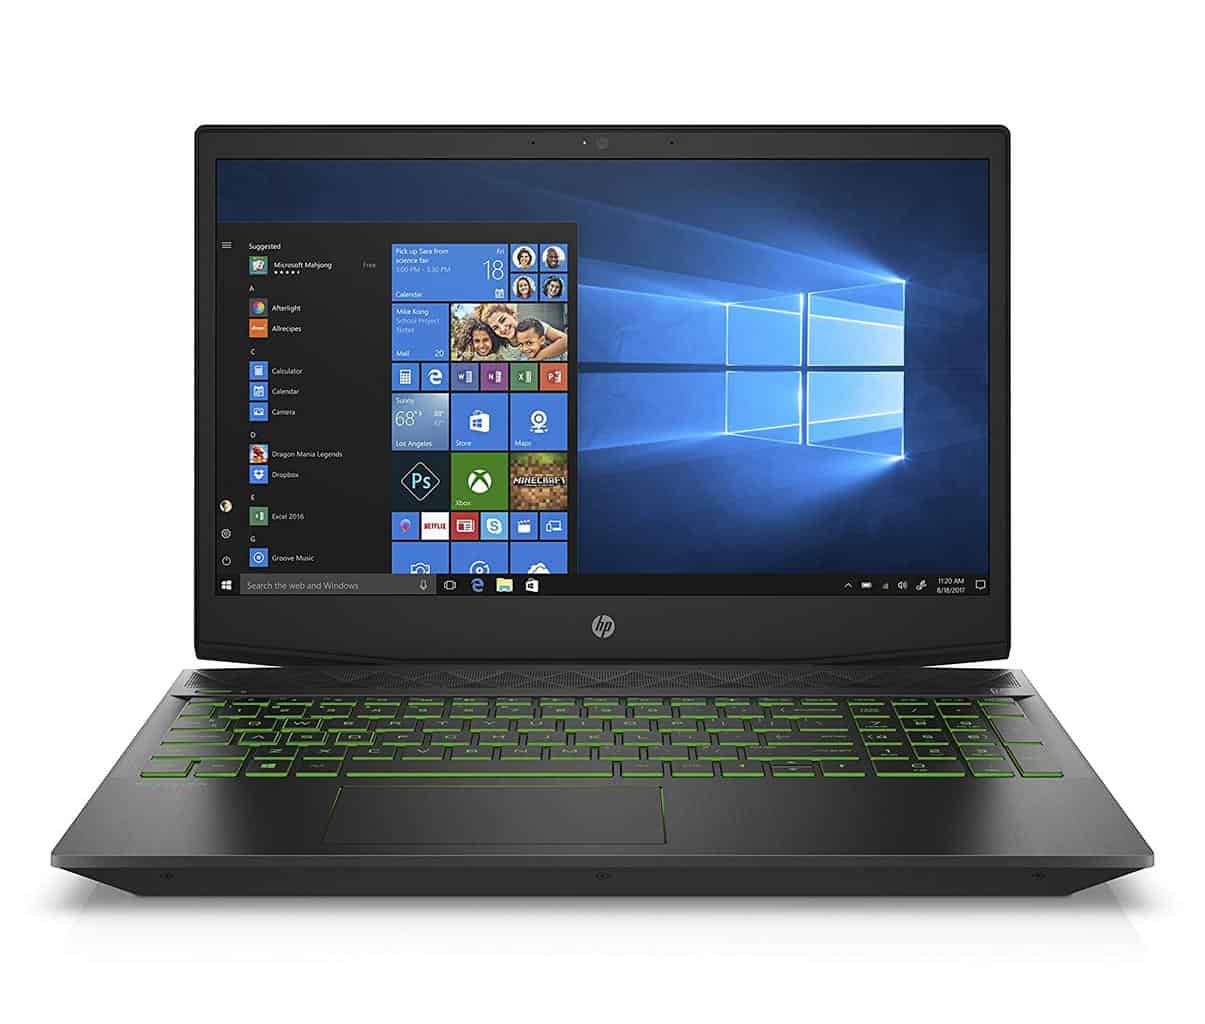 HP Pavilion 15cx0042nr Laptop Review FancyAppliance